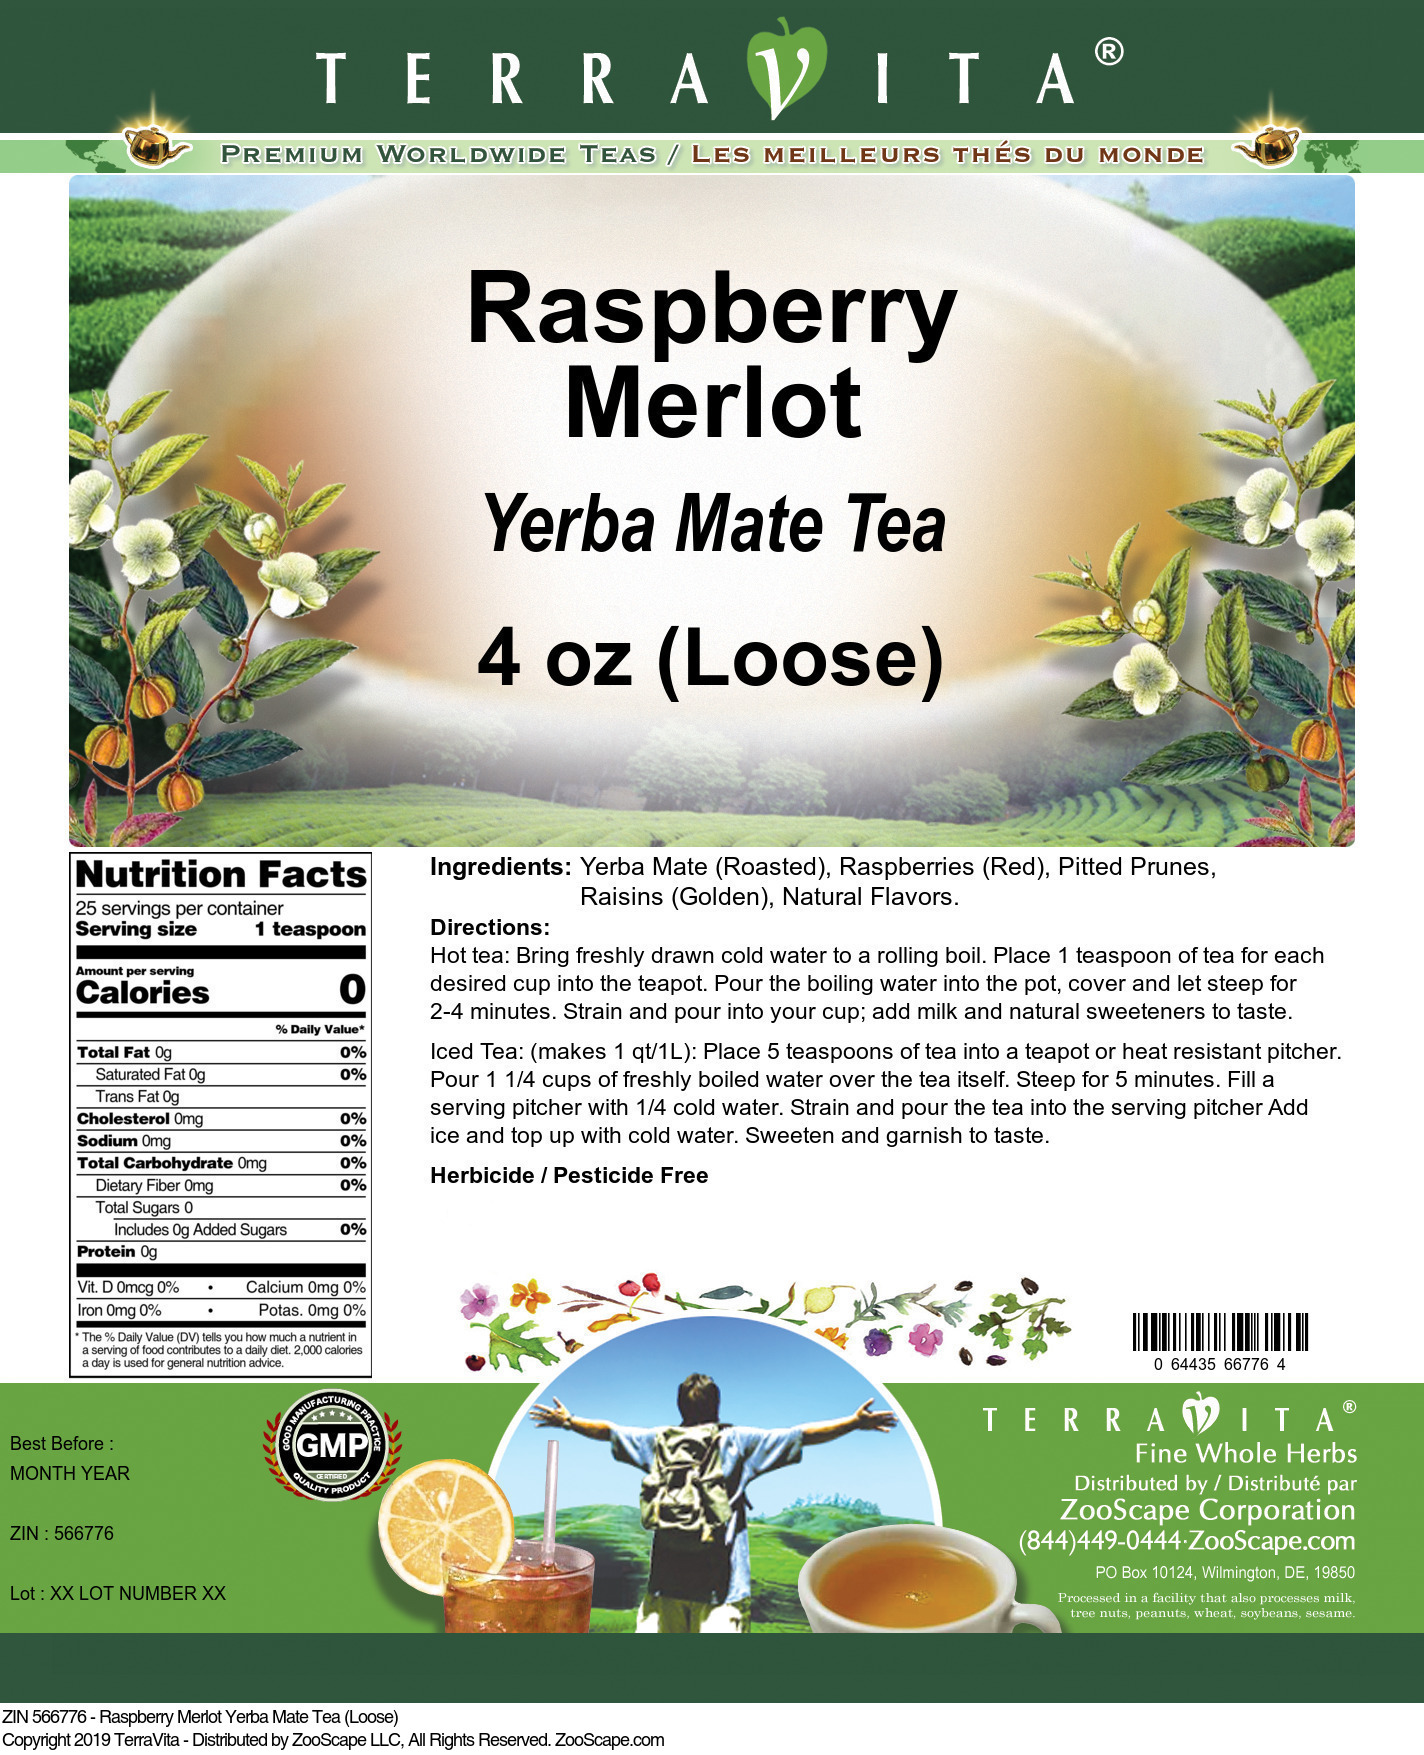 Raspberry Merlot Yerba Mate Tea (Loose) - Label